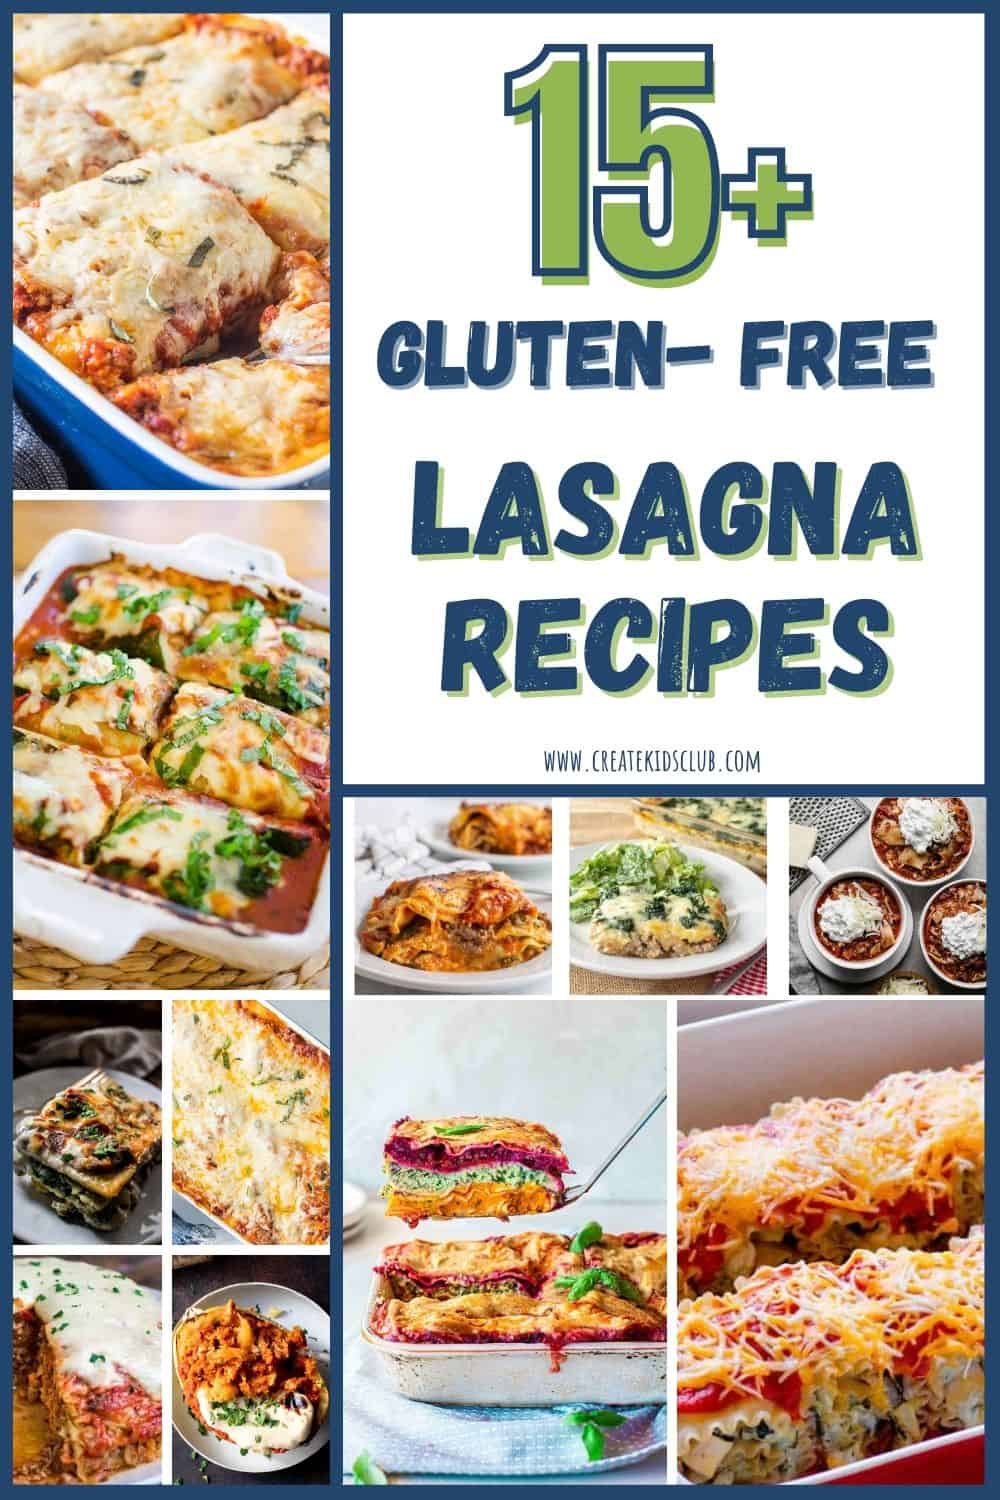 11 pictures of gluten free lasagna recipes.